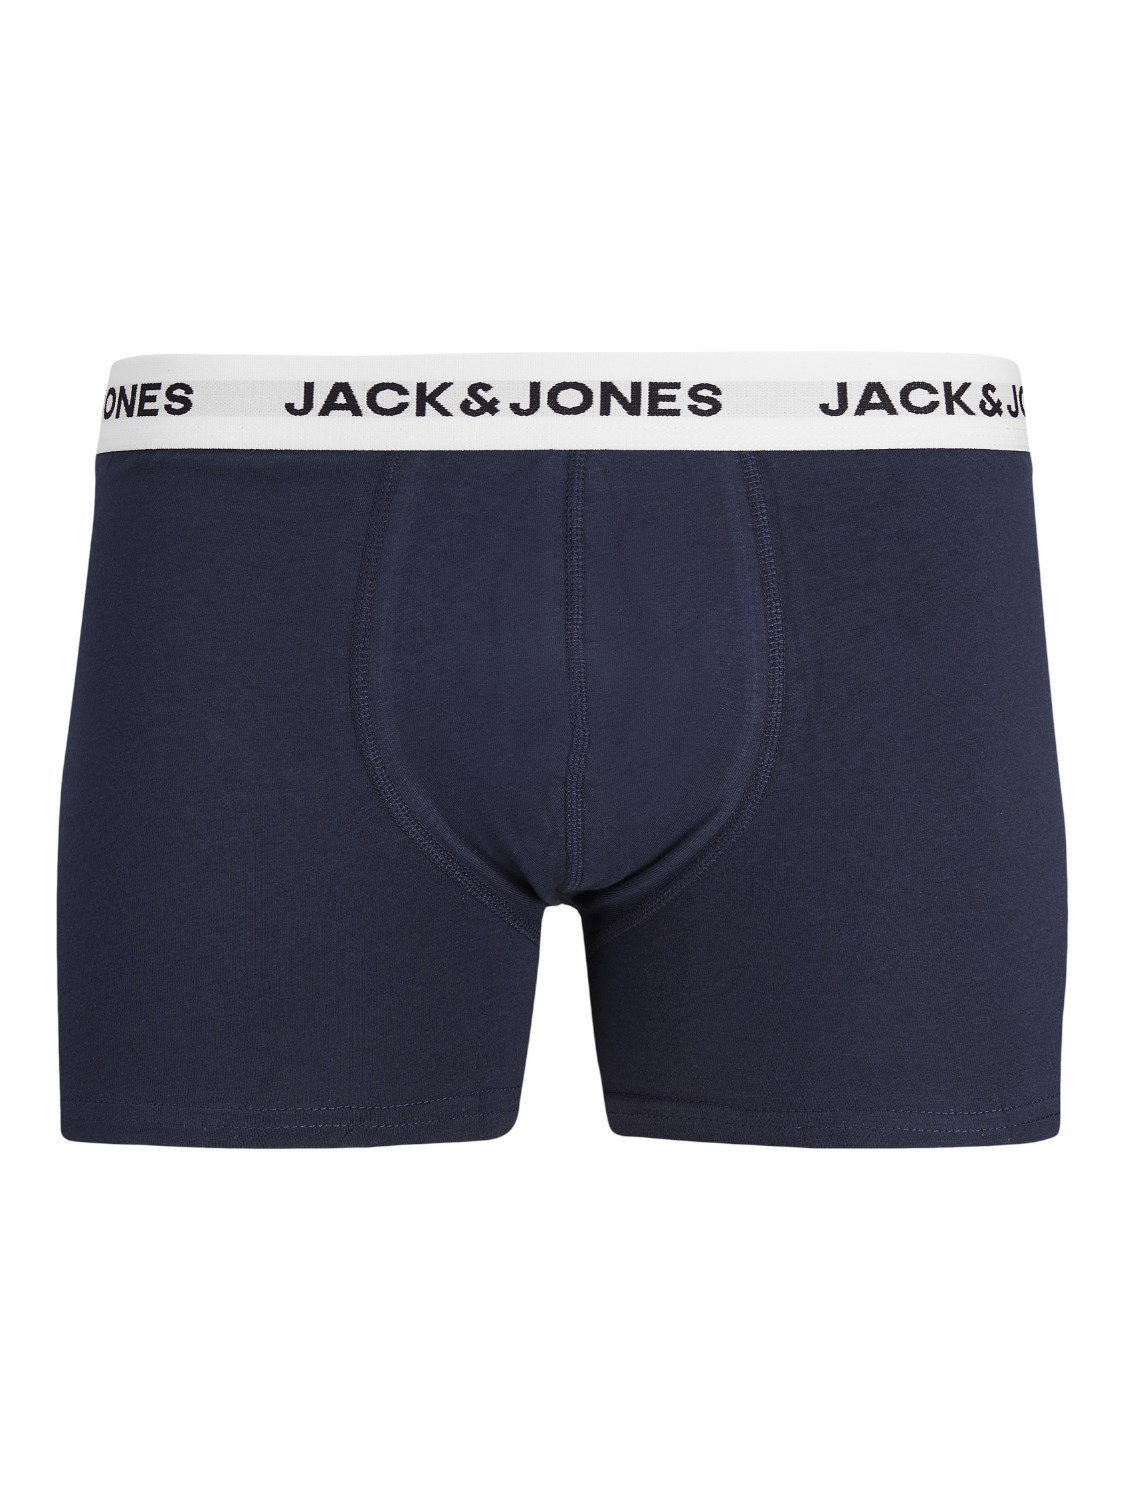 Boxershorts & JACBASIC Jones Basic 5er-Pack Trunks night/navyblazer/DGM/black/black 6824 Unterhosen Jack (5-St) in Mehrfarbig forest Boxershorts Set